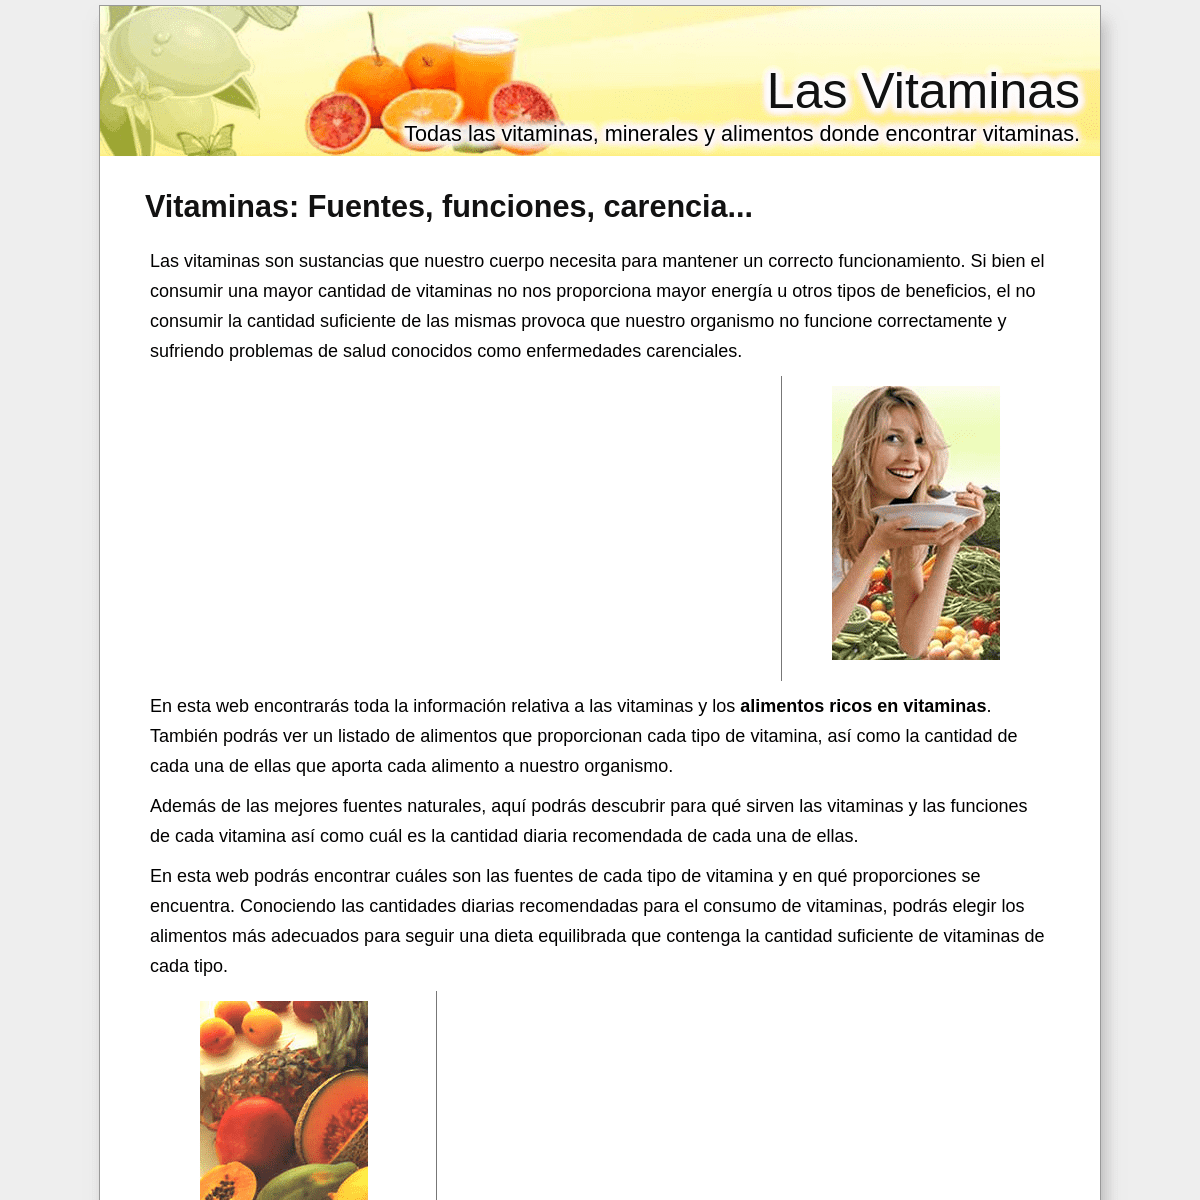 A complete backup of vitaminas.org.es